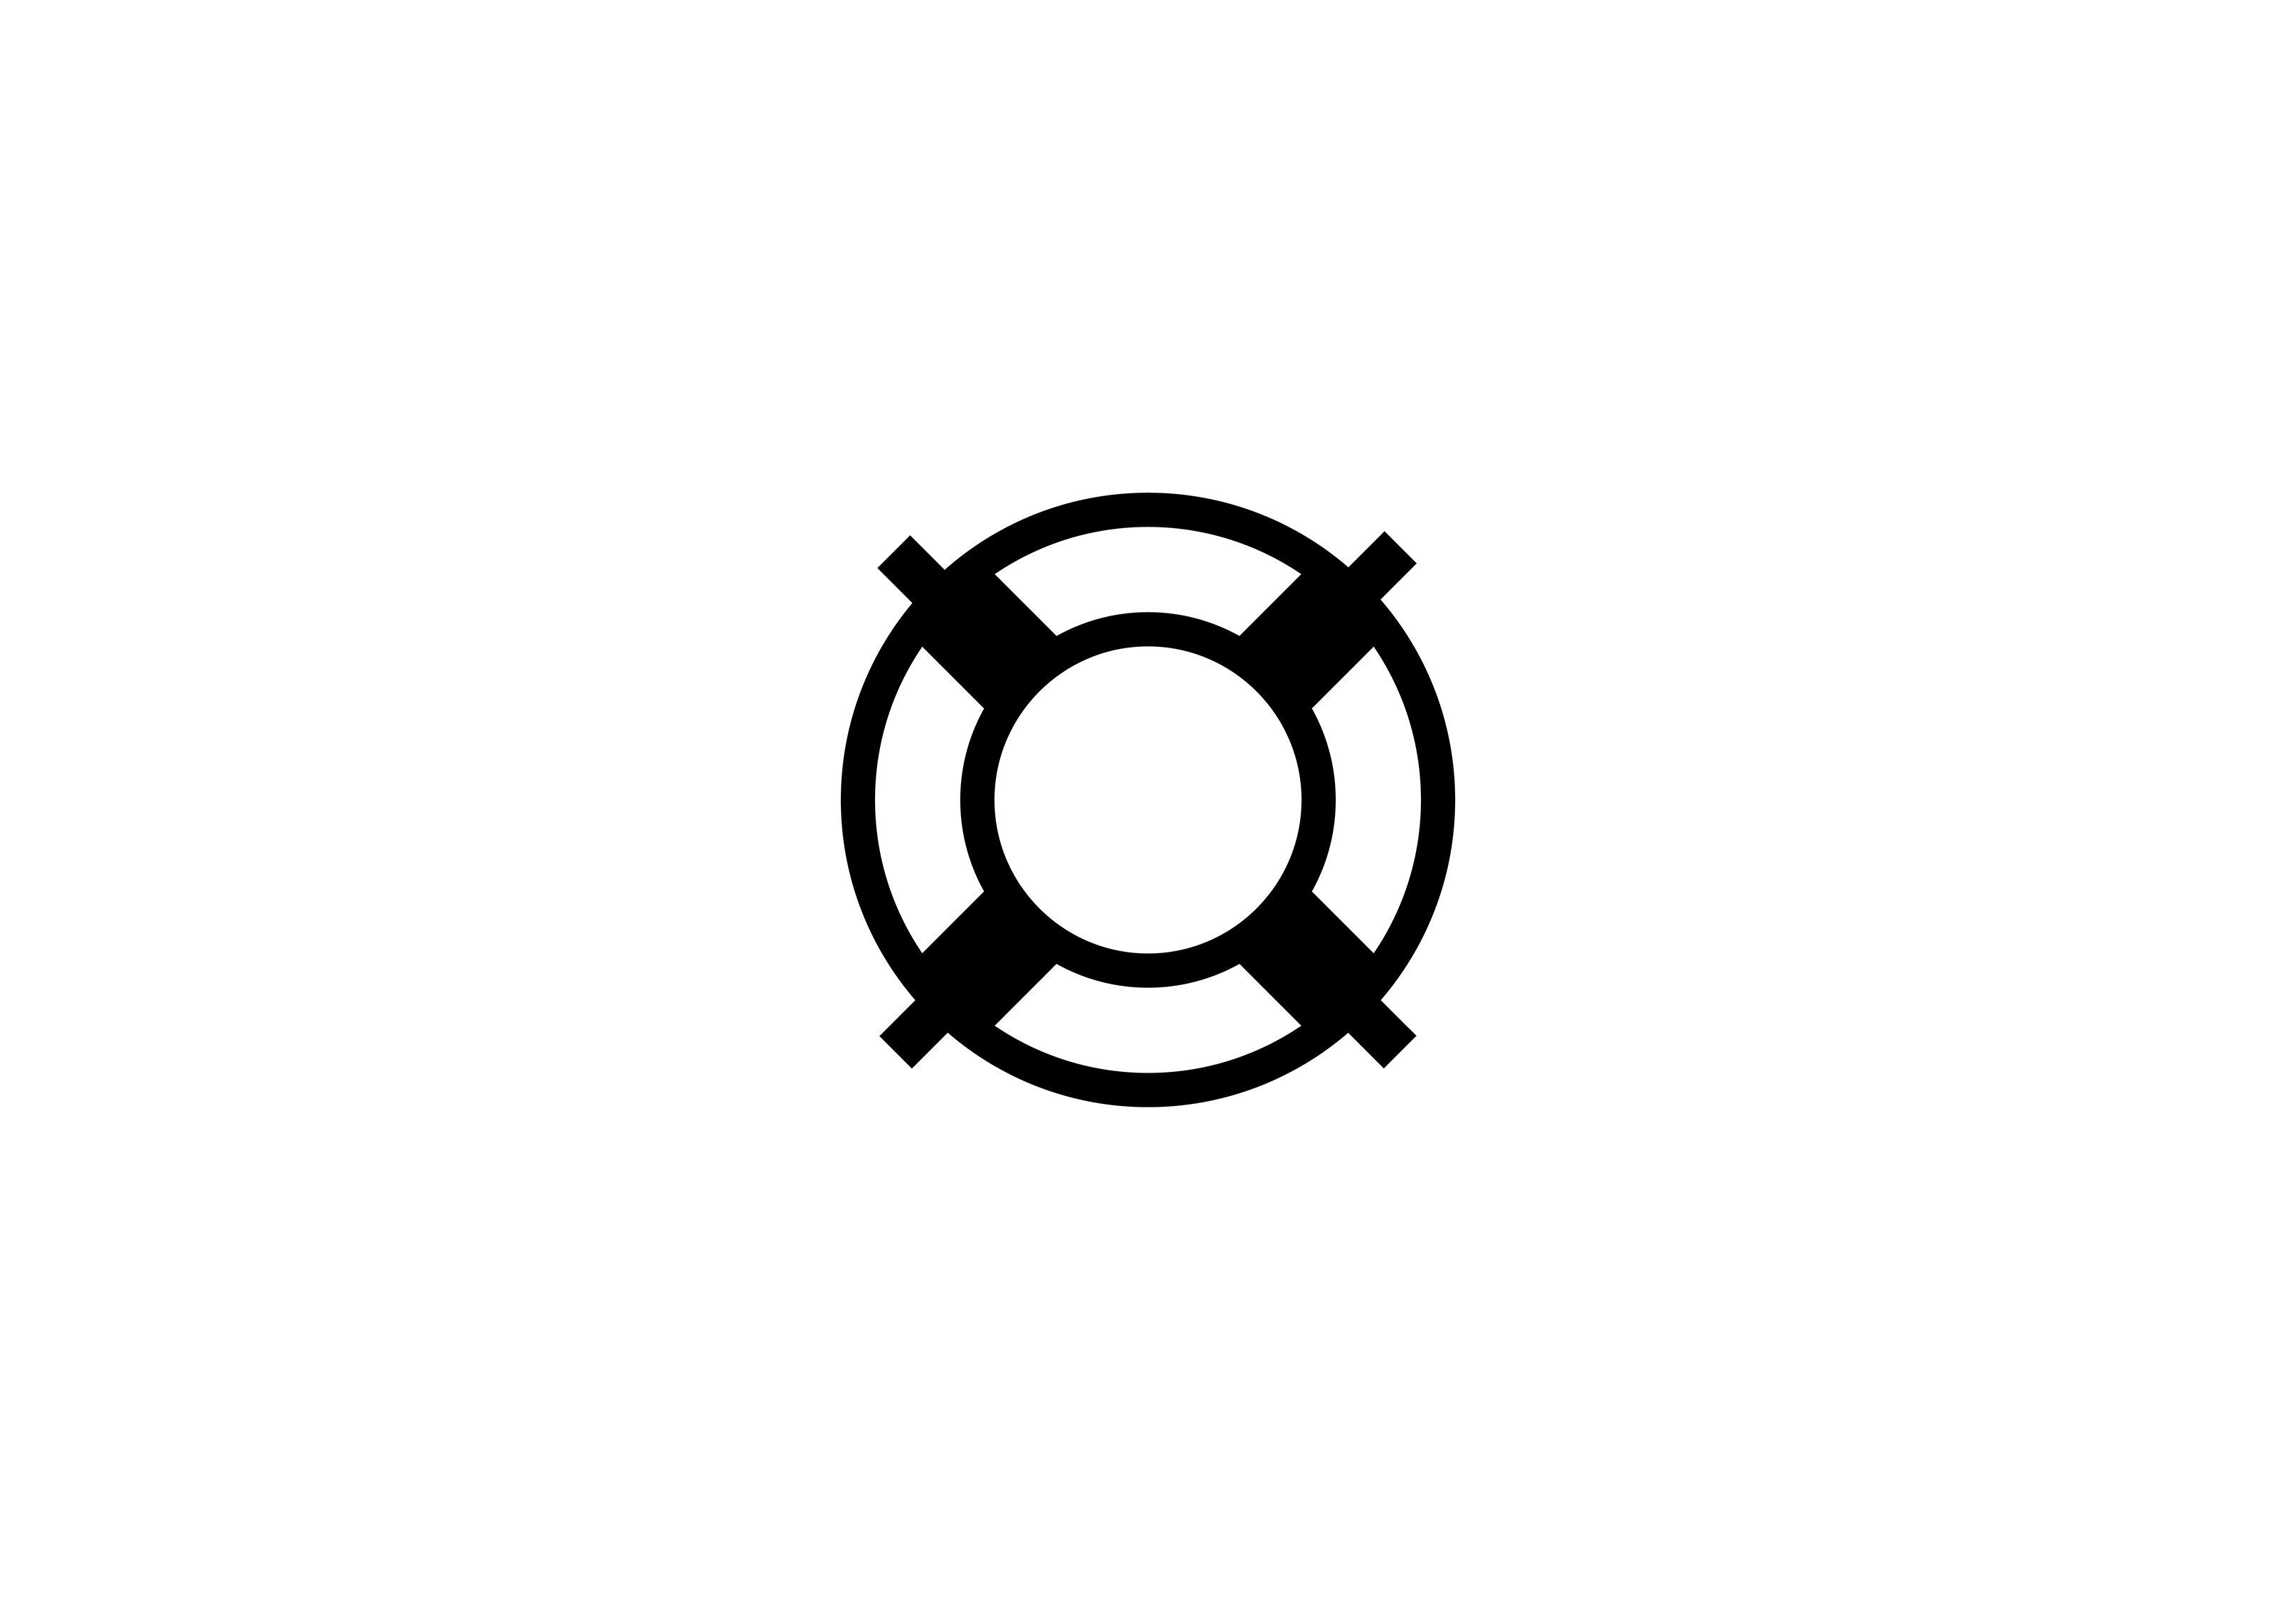 Solverr Logo